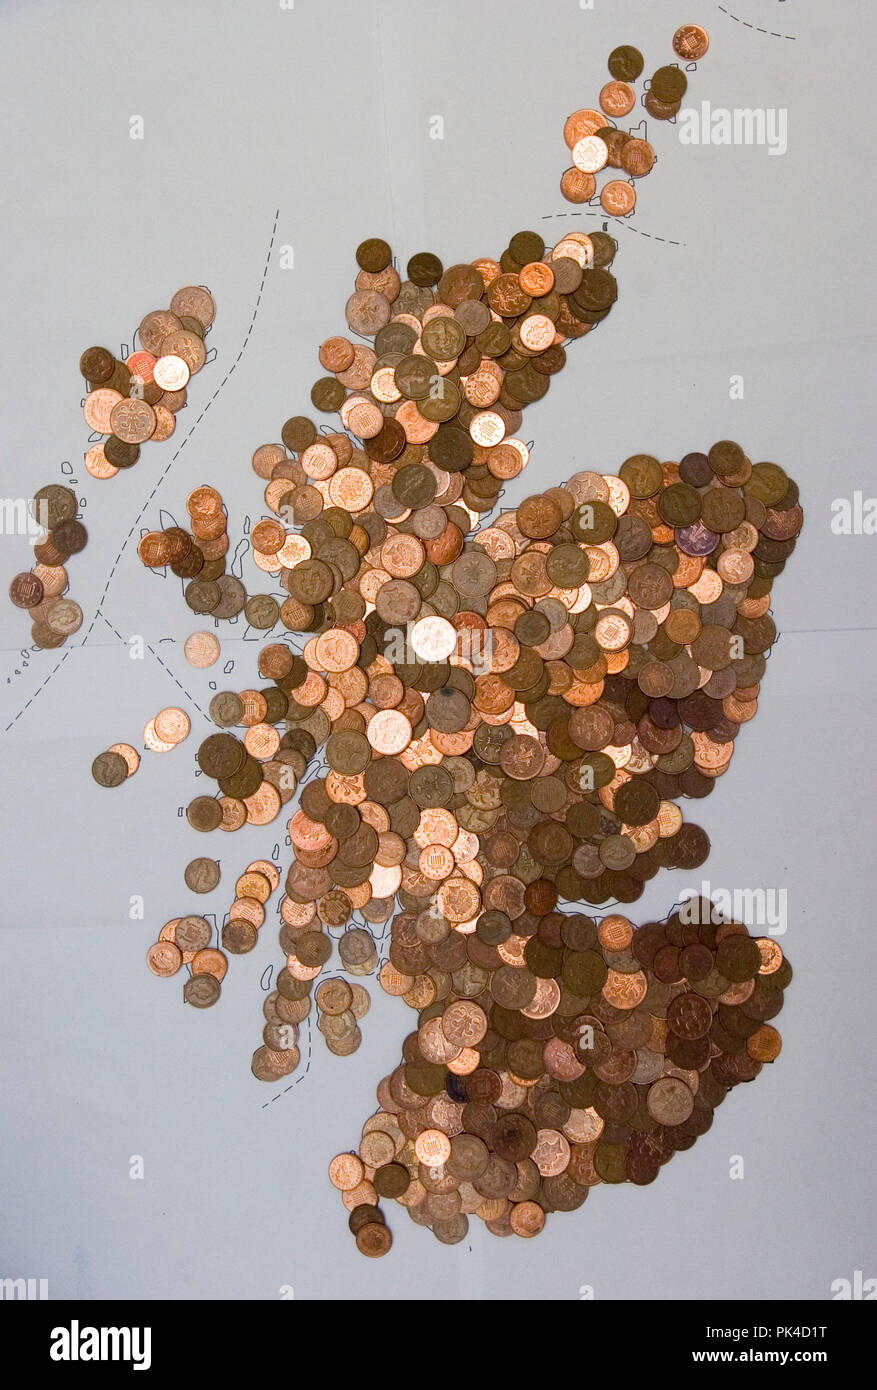 Geld, Wechselgeld, Ersparnisse, Penny's, Pence, Bullen, Schottland, Landkarte, Wirtschaft, Bargeld, Haushalt, Finanzen, Stockfoto